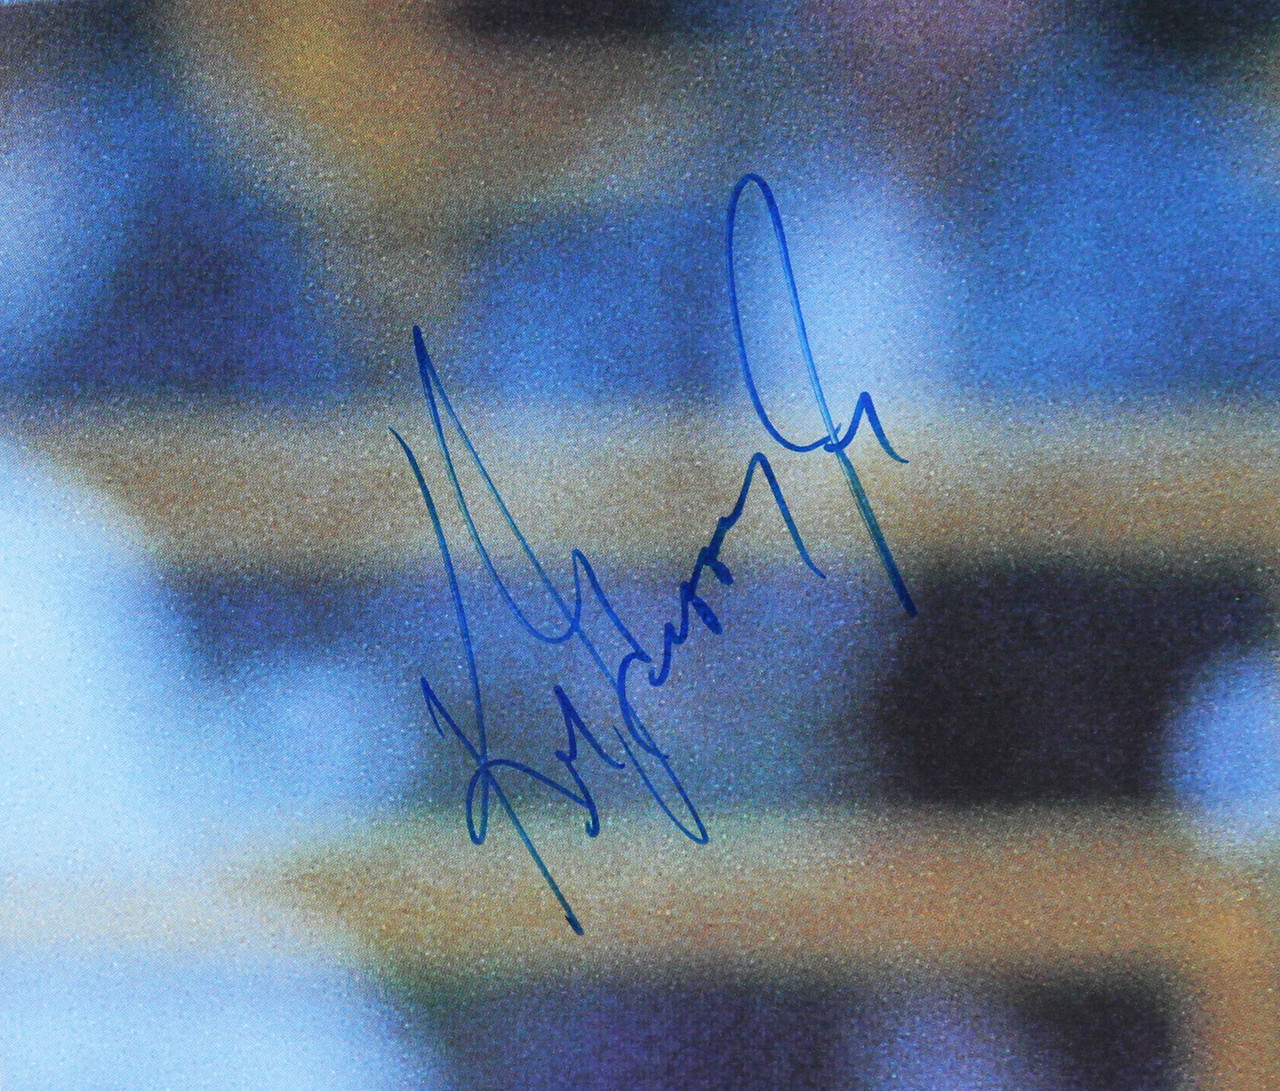 Ken Griffey Jr Baseball Hall Of Fame Member Signature Shirt - Ink